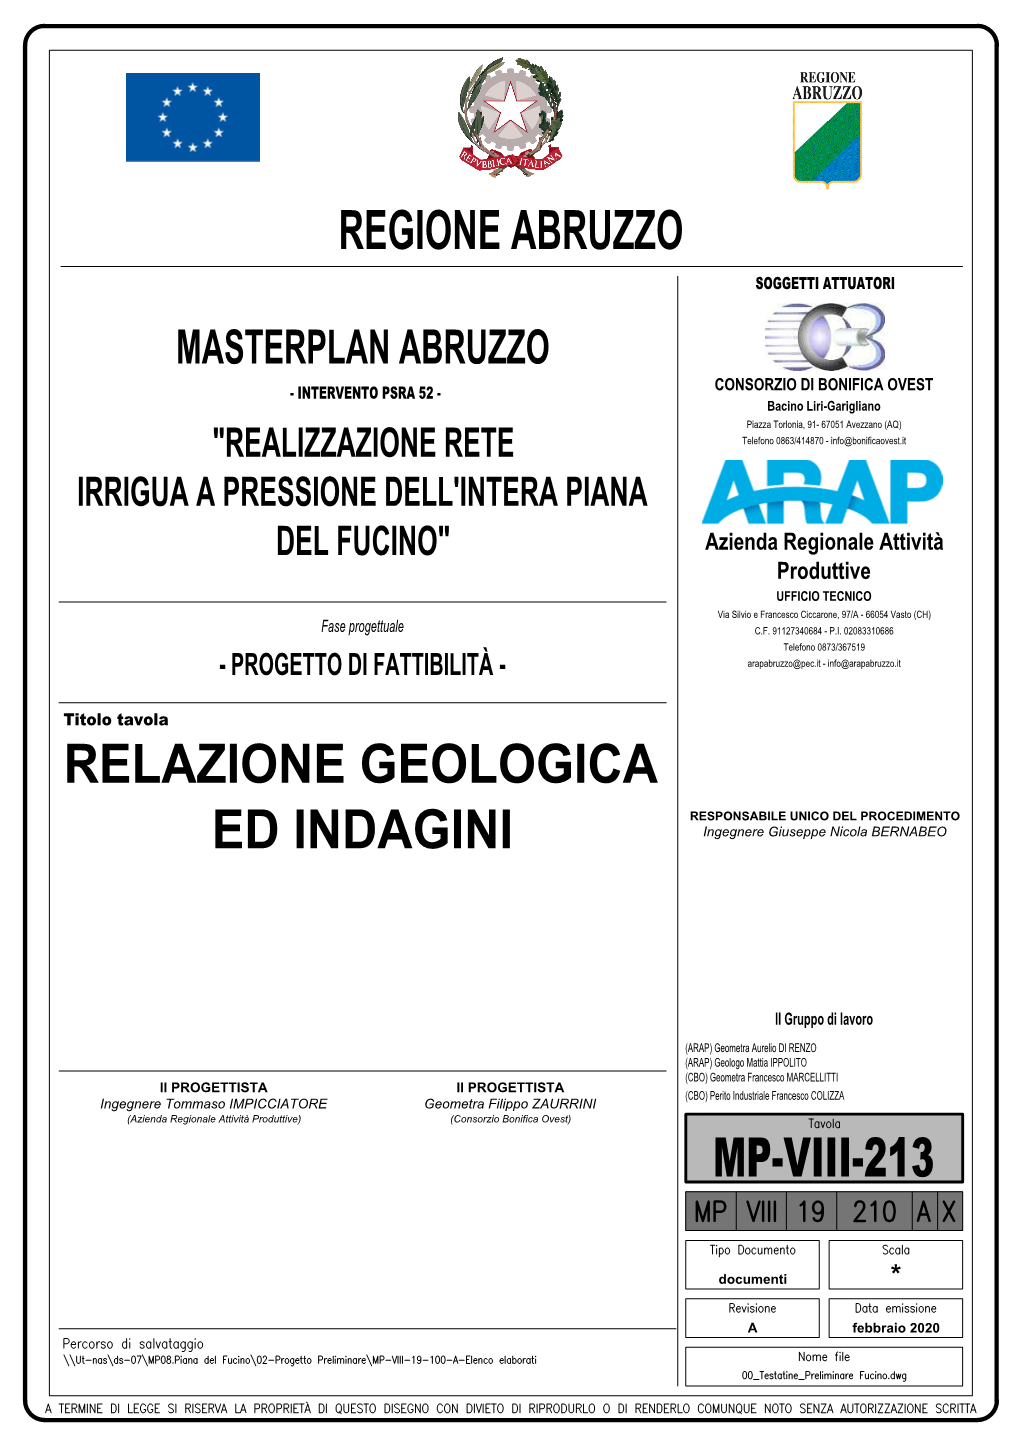 Mp-Viii-213 Relazione Geologica Ed Indagini Regione Abruzzo